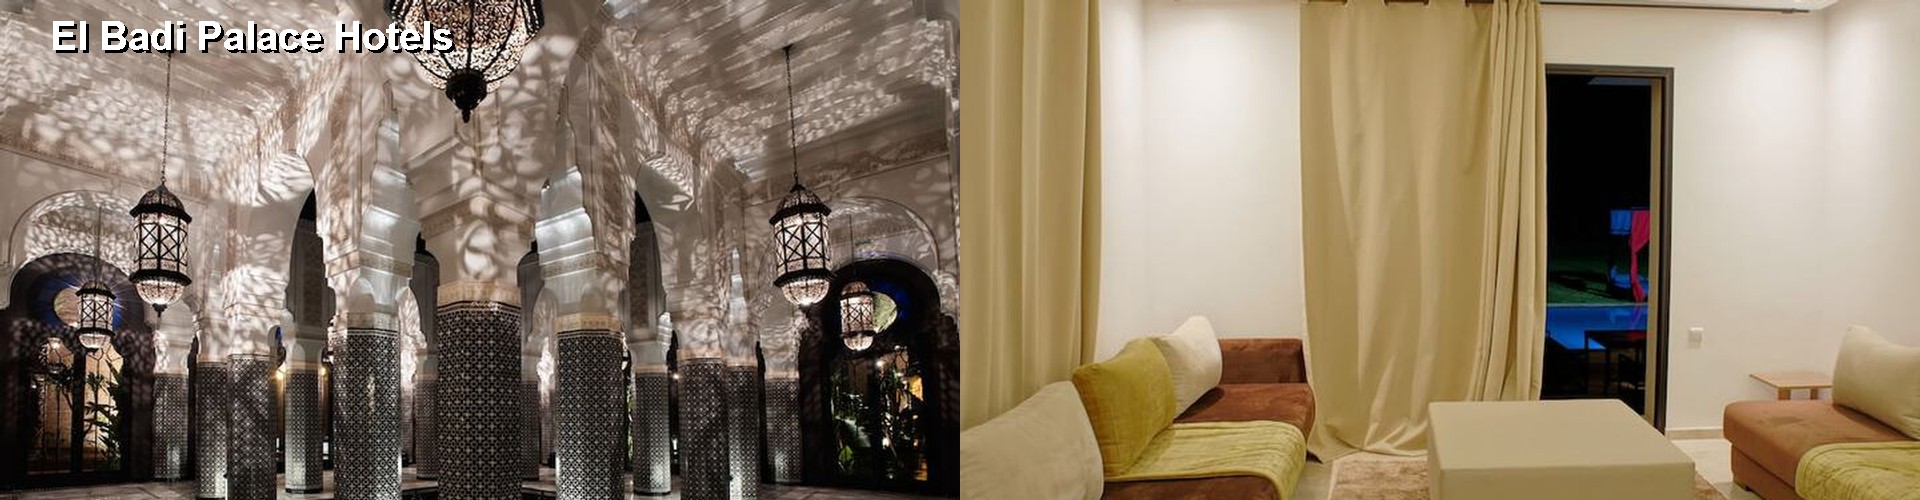 5 Best Hotels near El Badi Palace